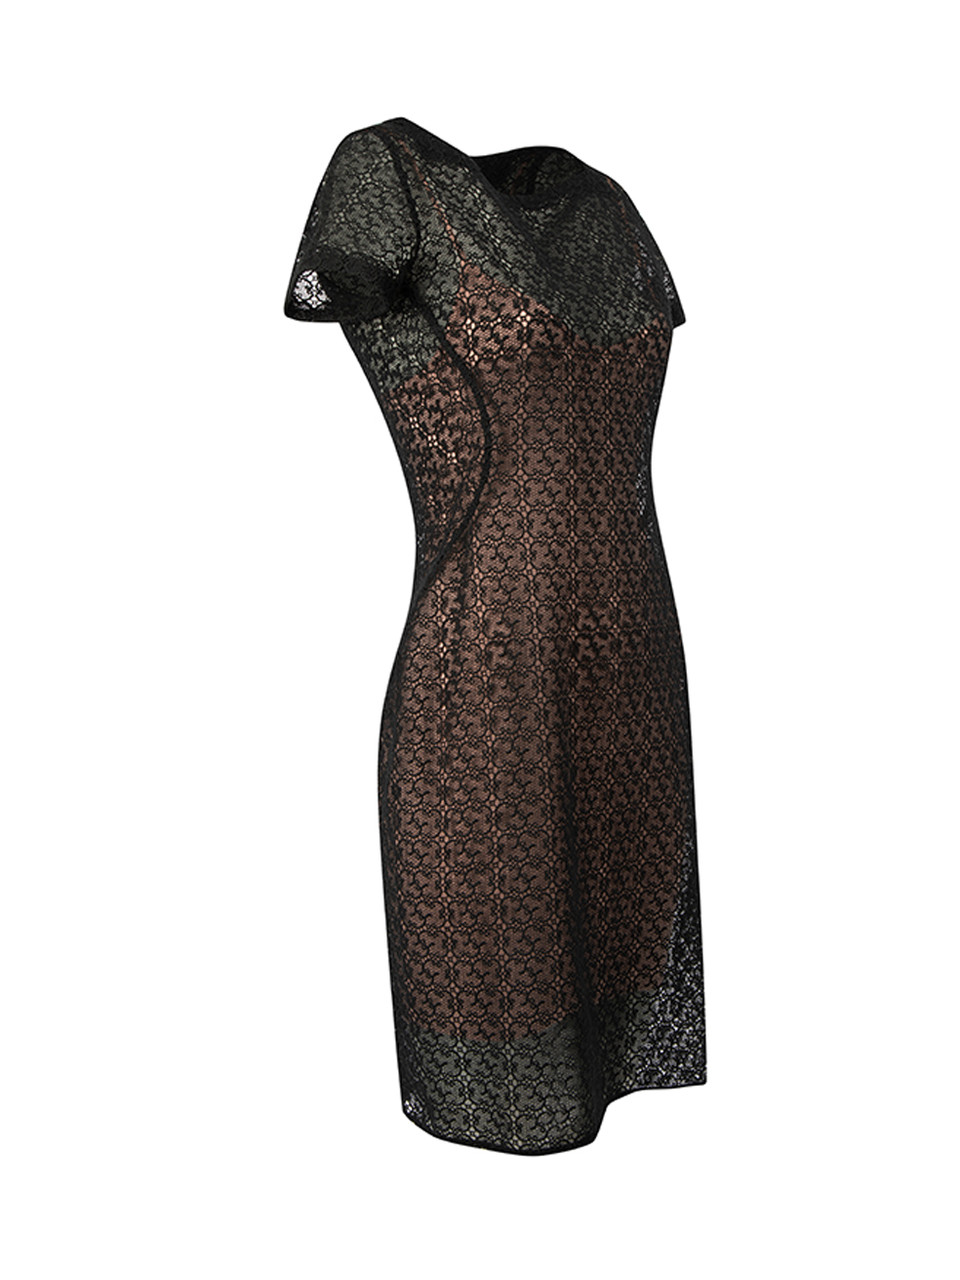 Alaïa Pierre Mantoux for Alaïa Black Lace Layered Mini Dress